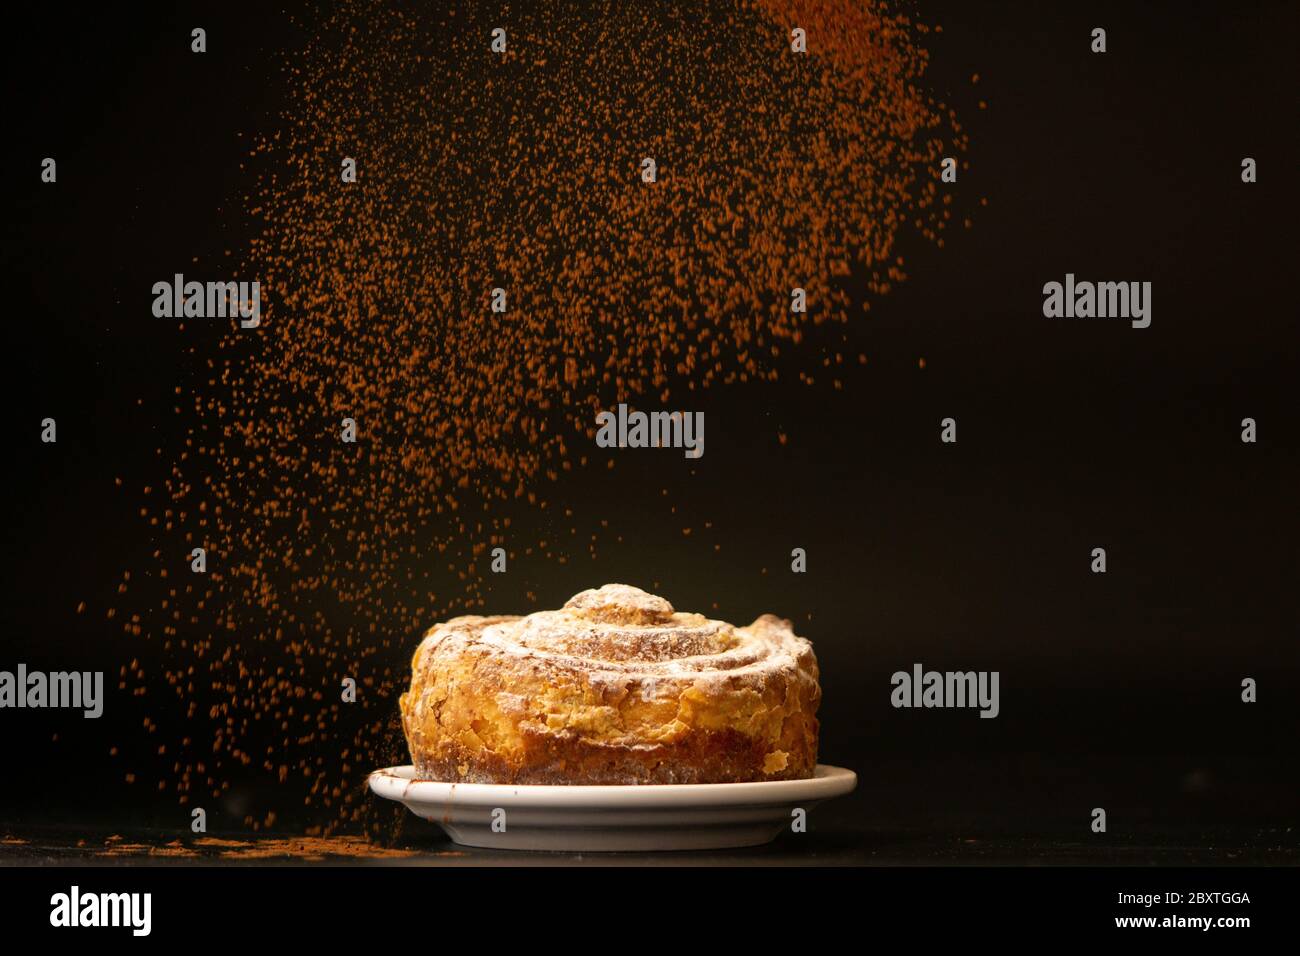 Cinnamon is sprinkling over fresh bundt cake. Cinnamon falls down, freezing motion. Copy space, black background. Bakery concept.  Stock Photo